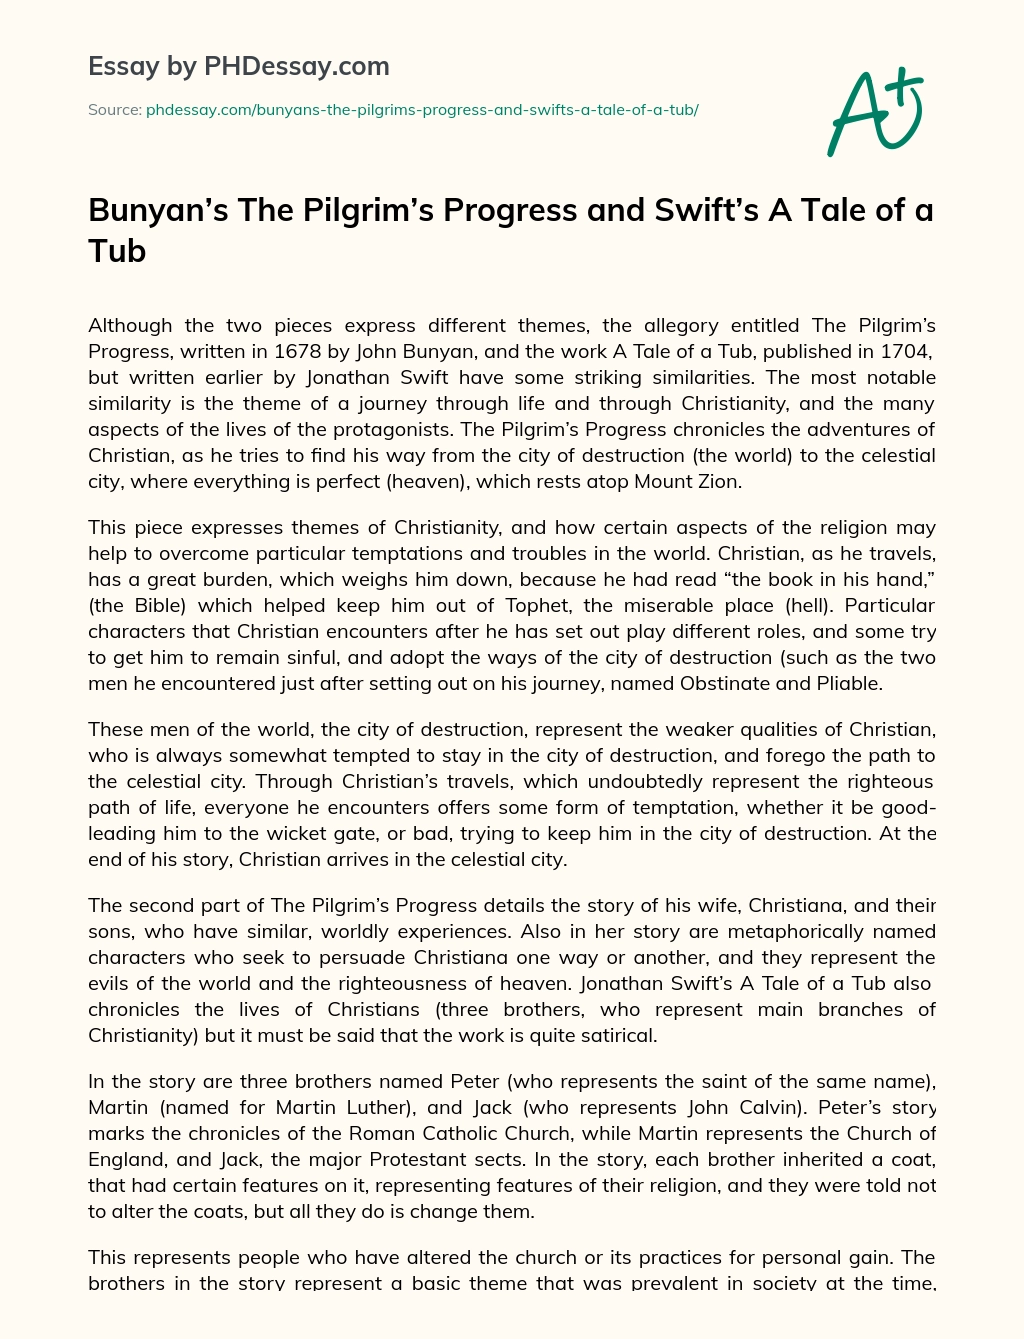 Bunyan’s The Pilgrim’s Progress and Swift’s A Tale of a Tub essay